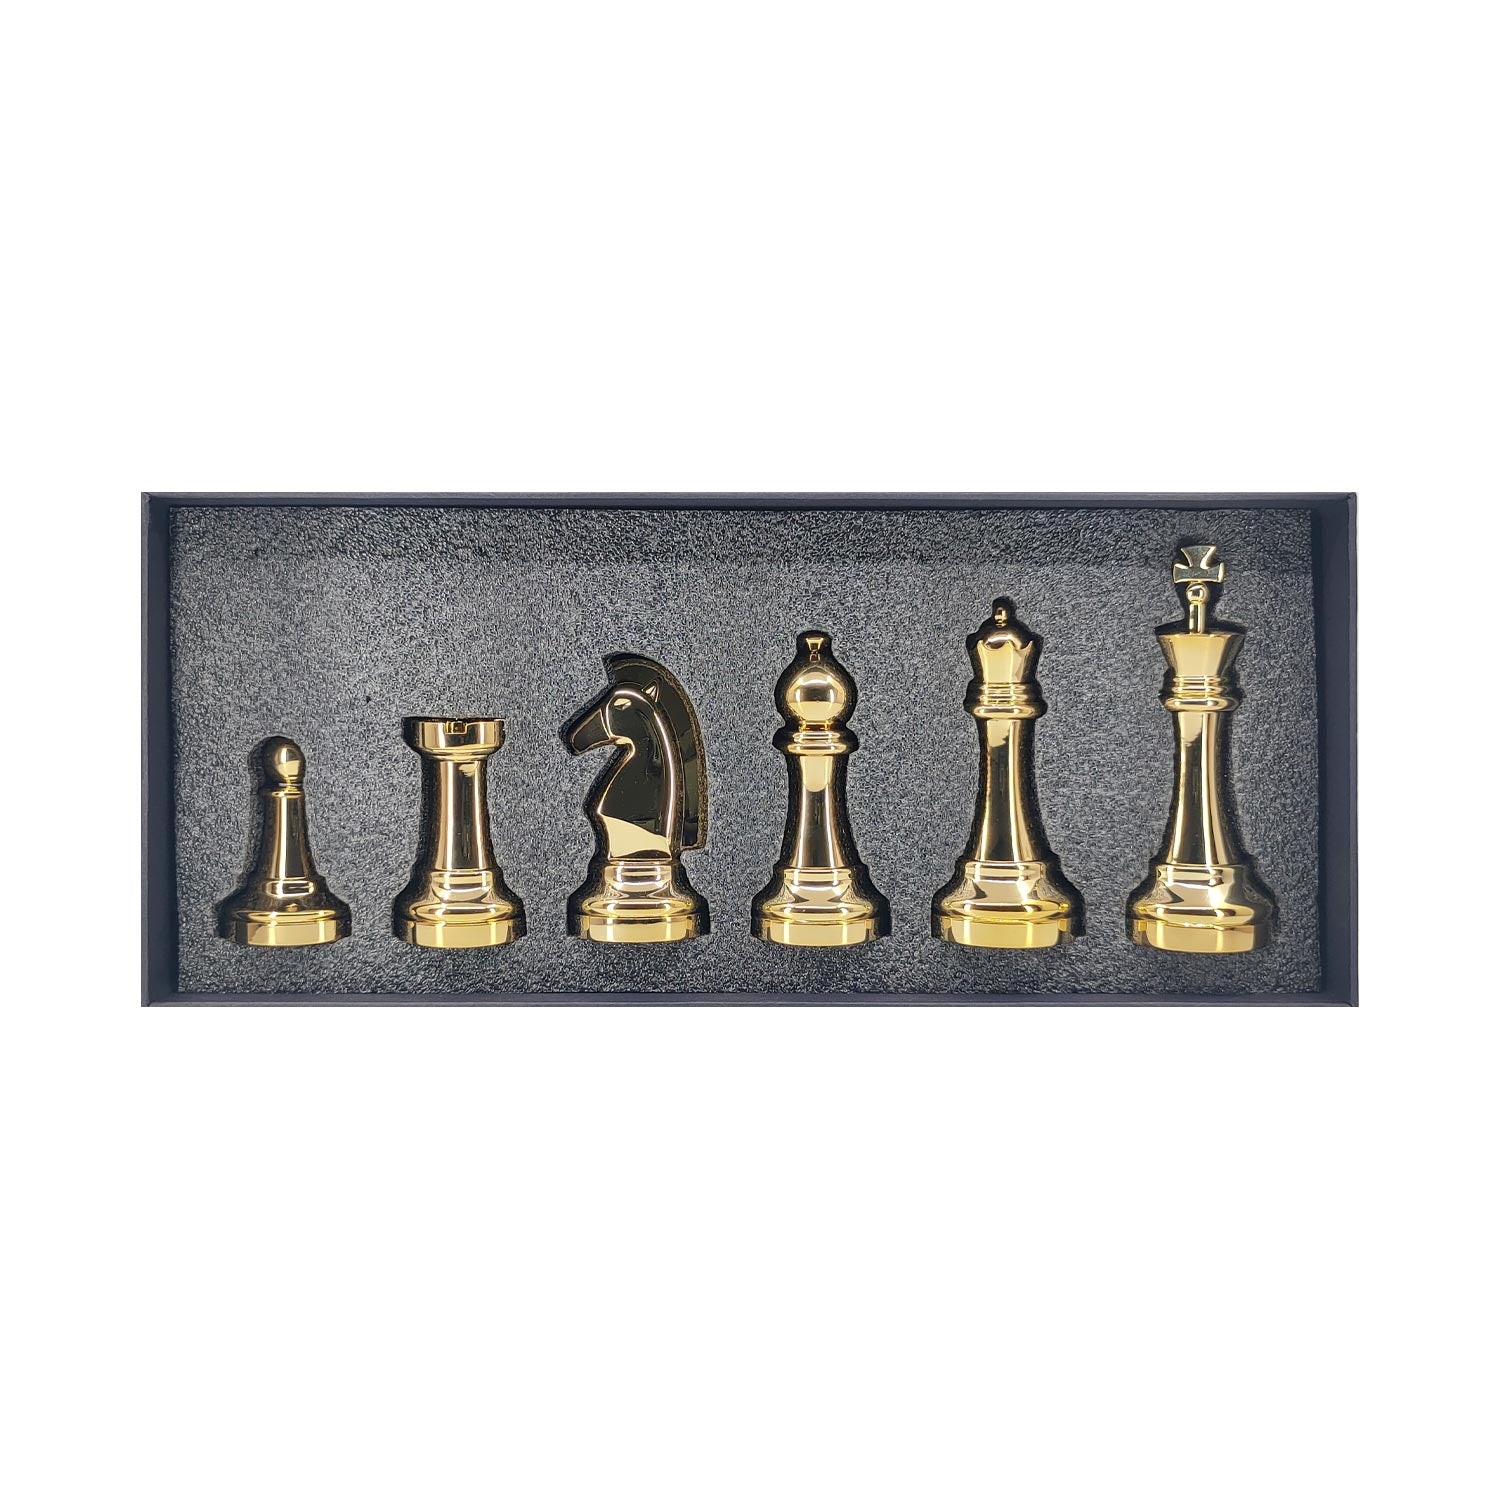 Silver Color Chess Piece - King, Hanayama Metal Puzzles